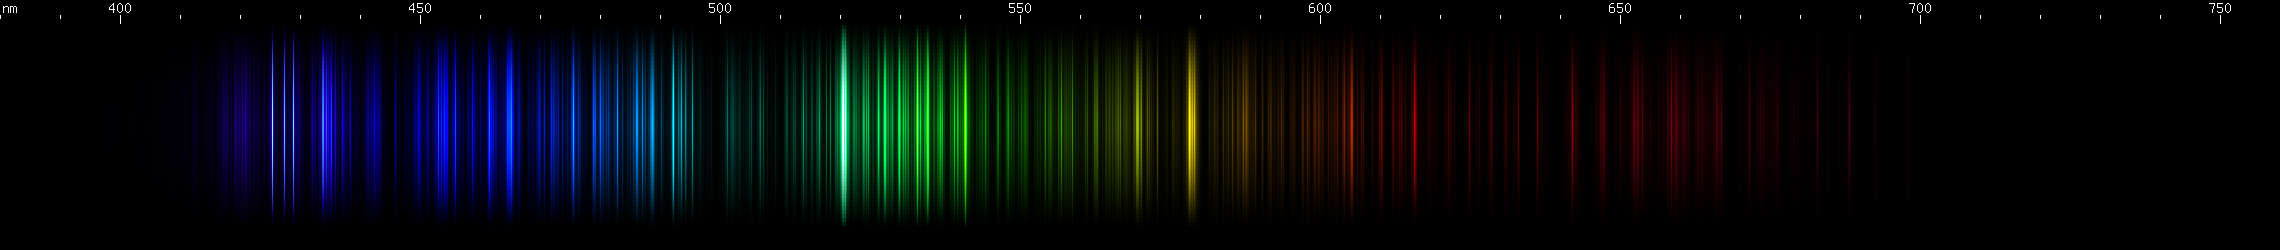 Spectral lines of Chromium.